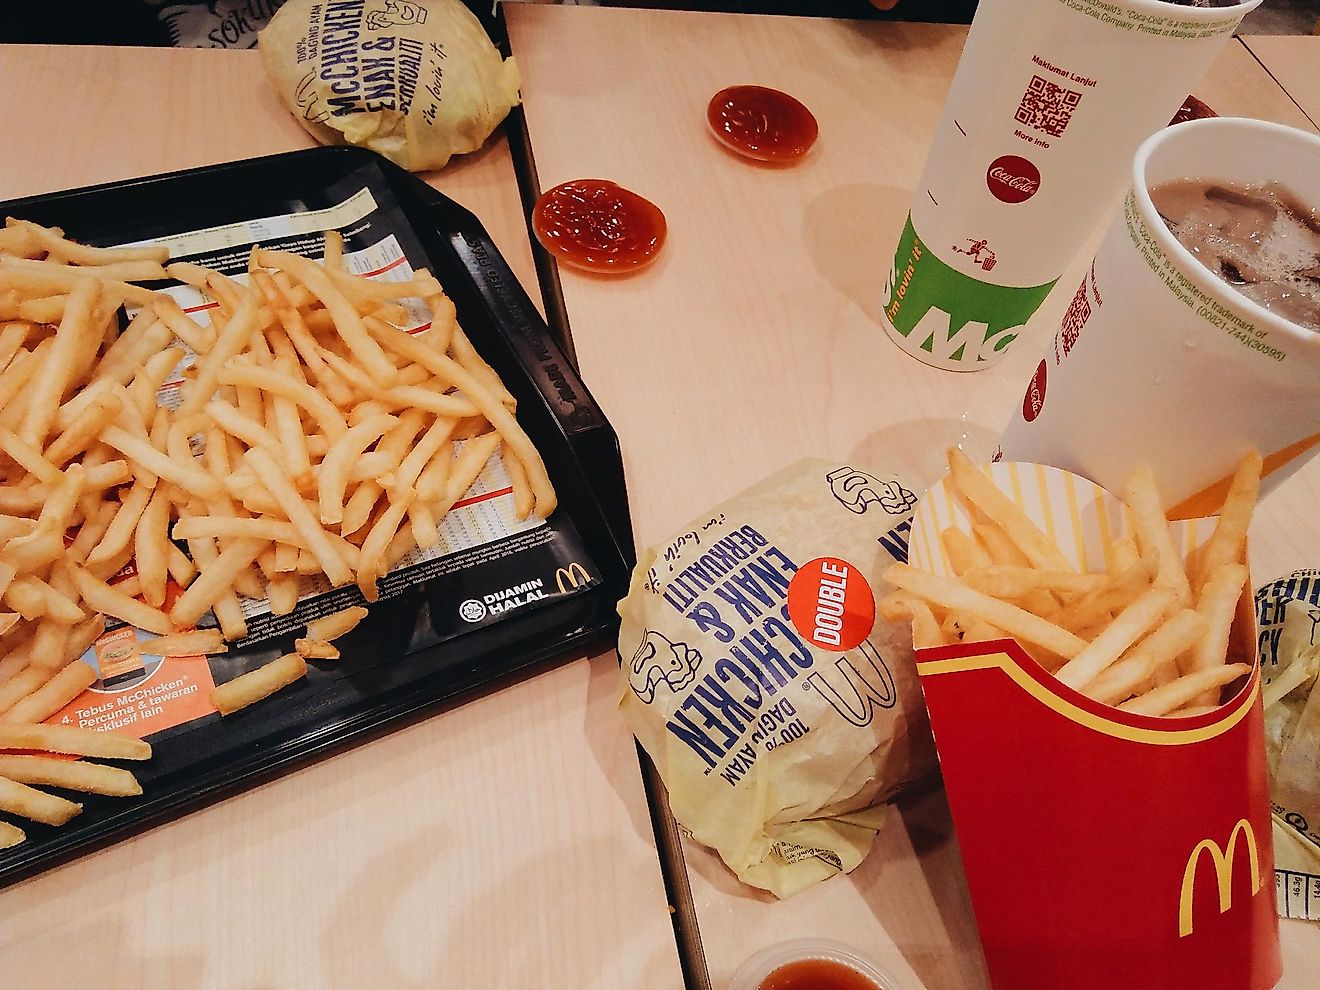 fast food obesity mcdonalds